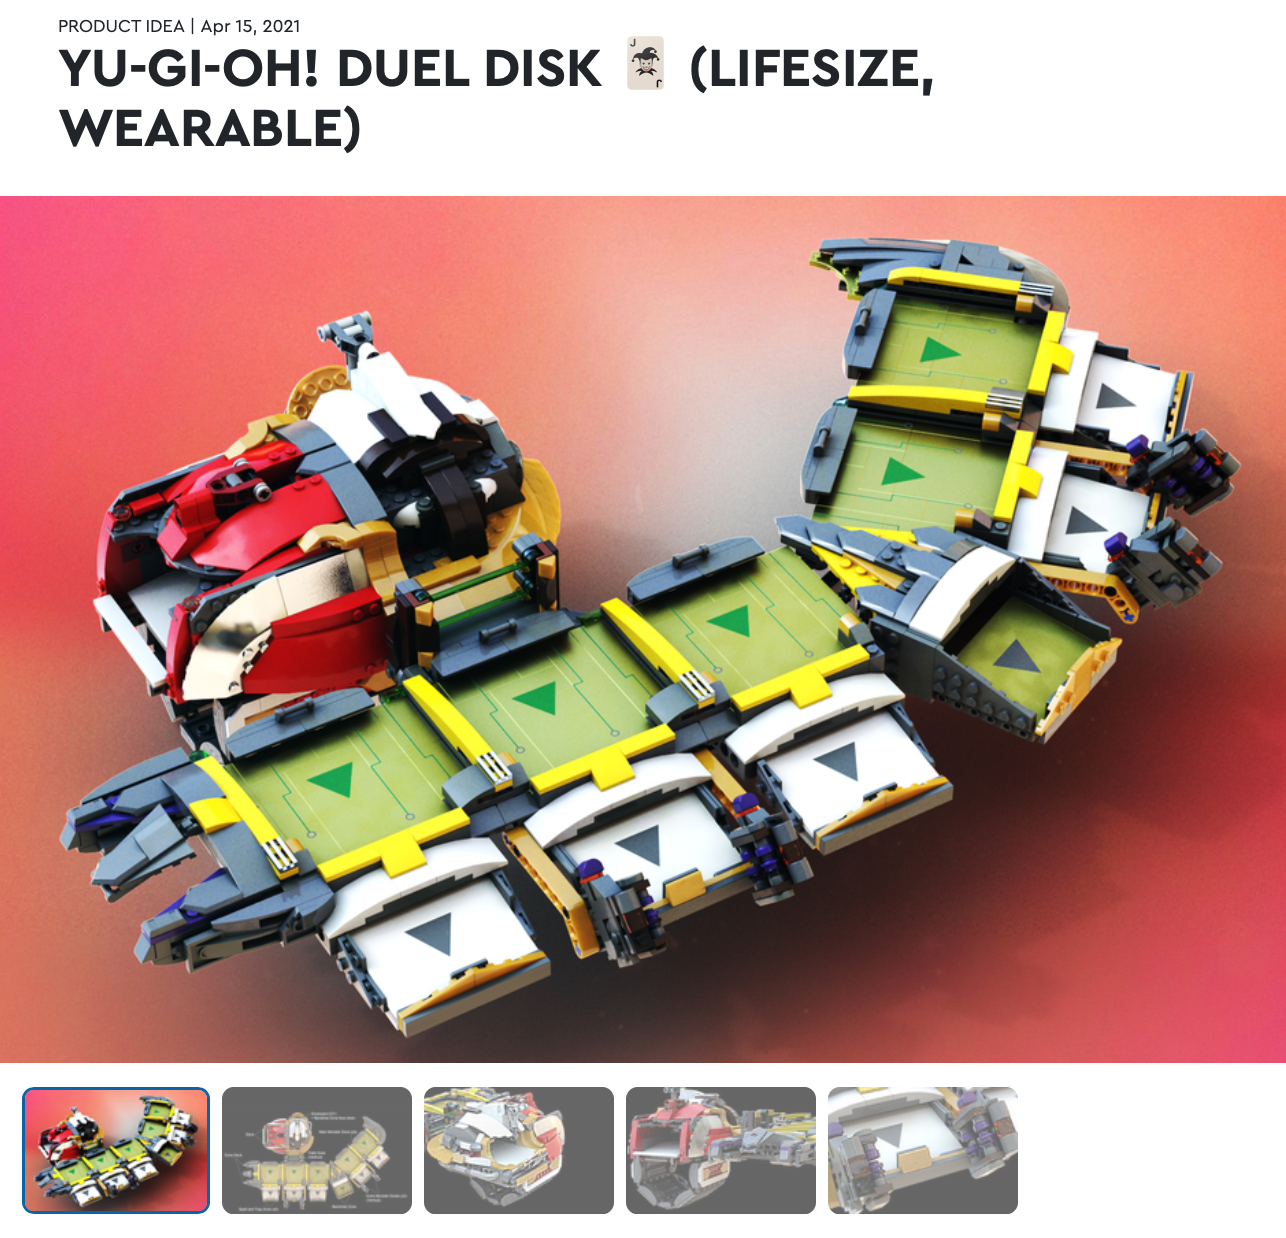 yugioh-duel-disk.png